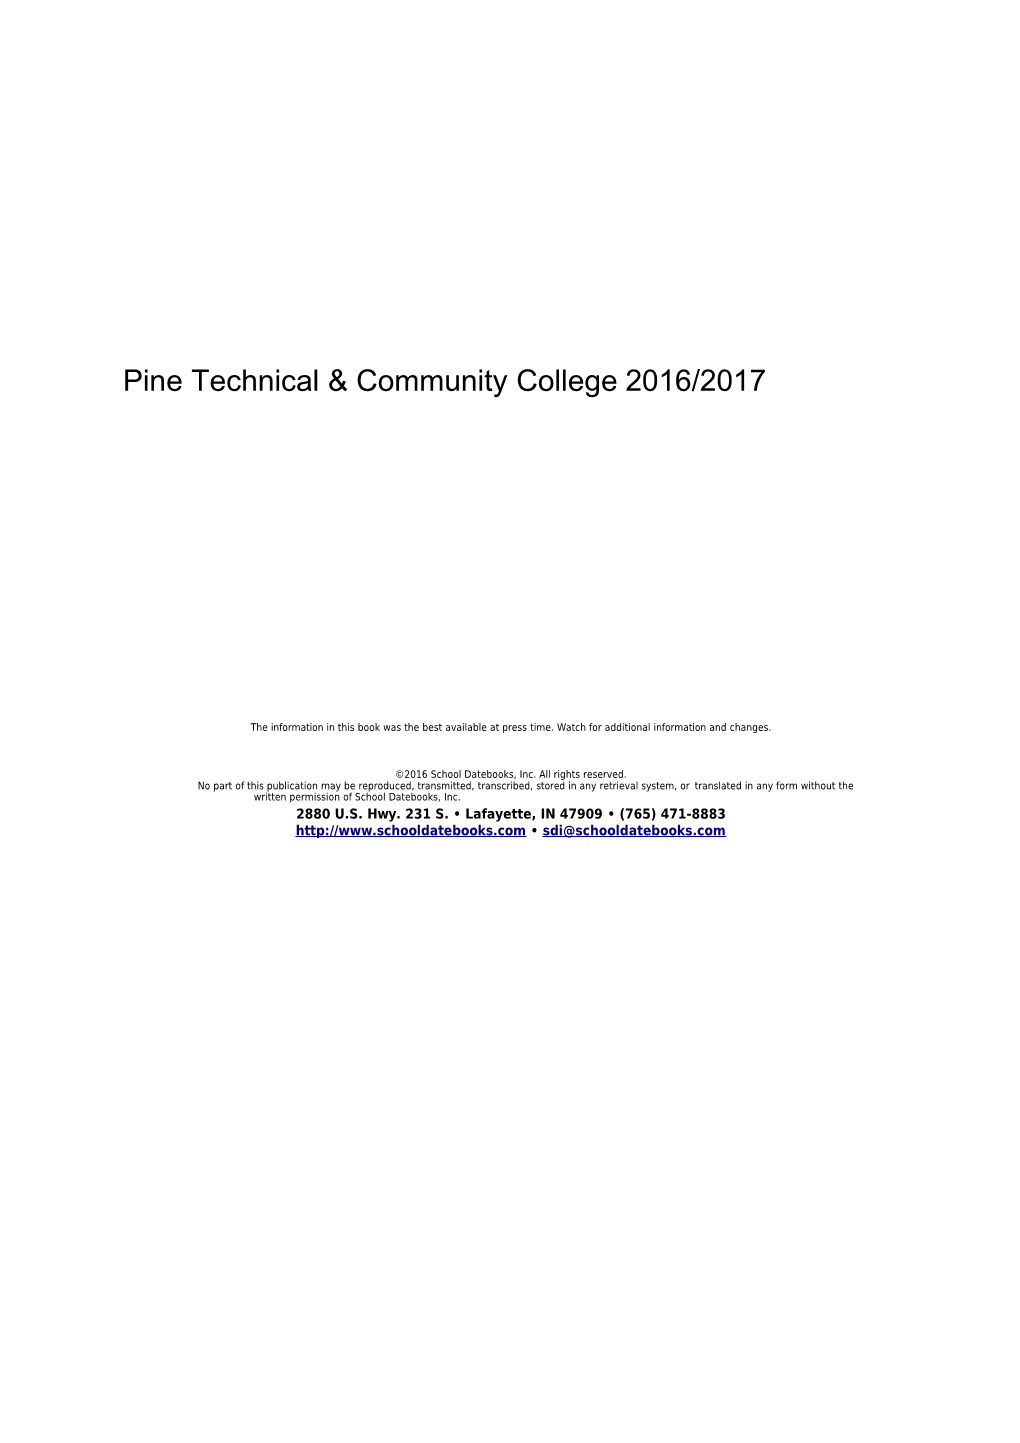 Pine Technical Community College 2016/2017